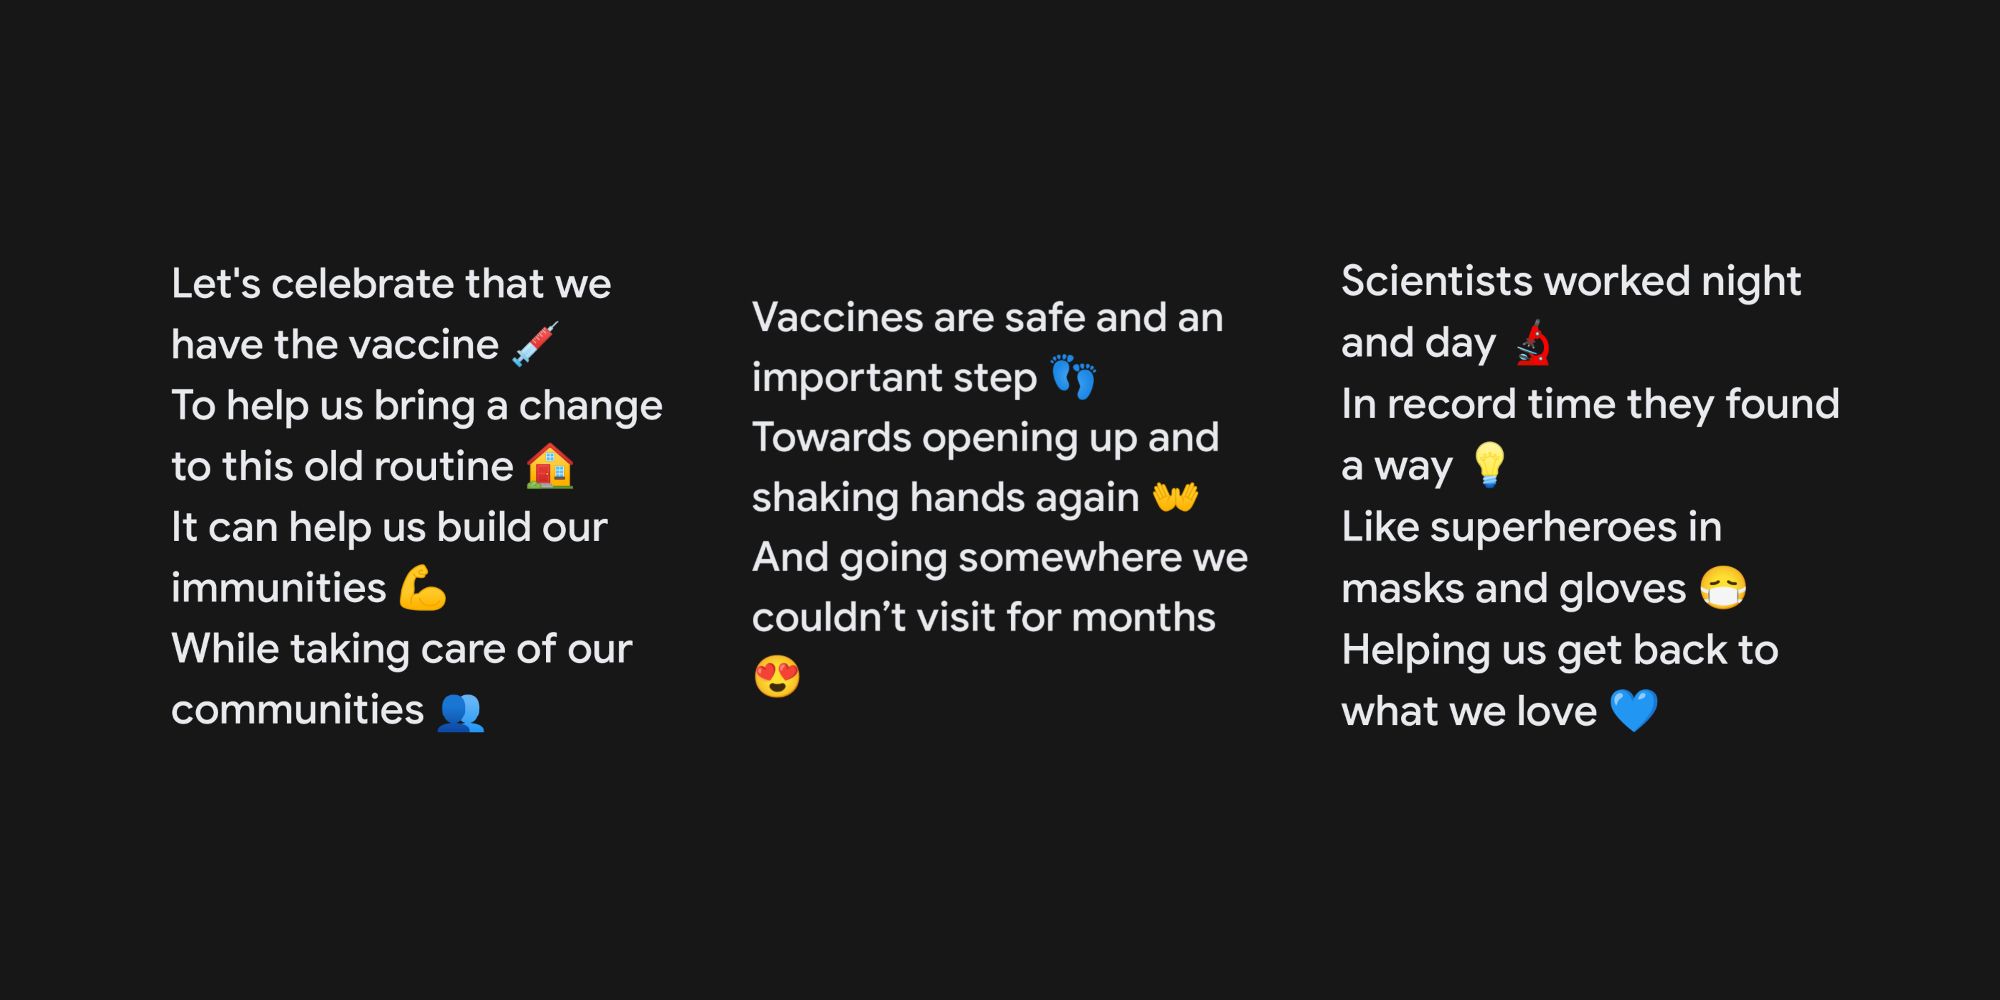 Google Assistant vaccine song lyrics